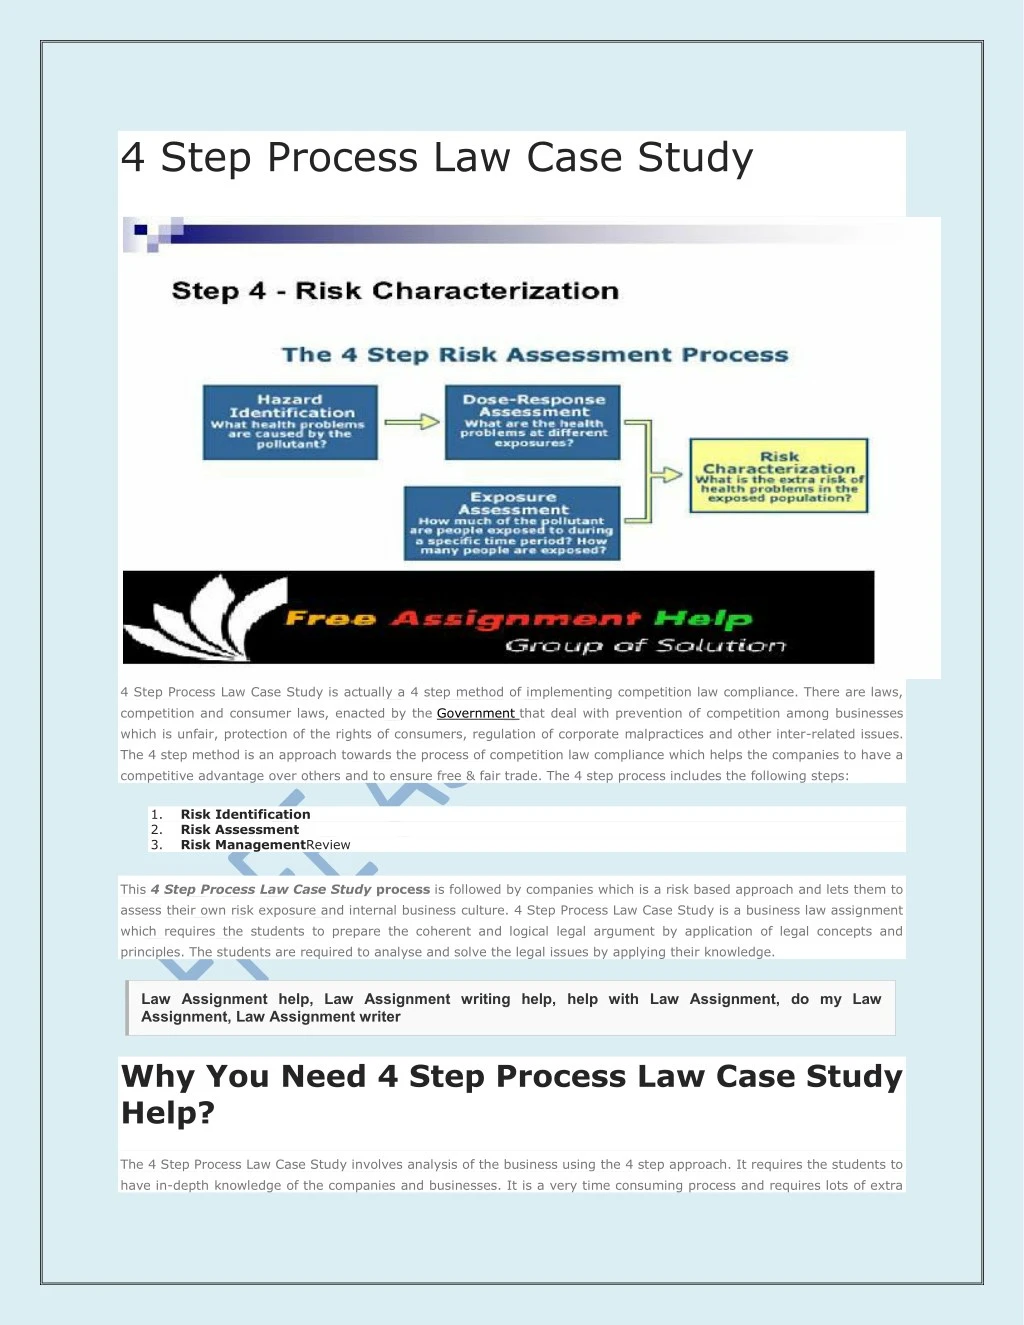 4 step process law case study